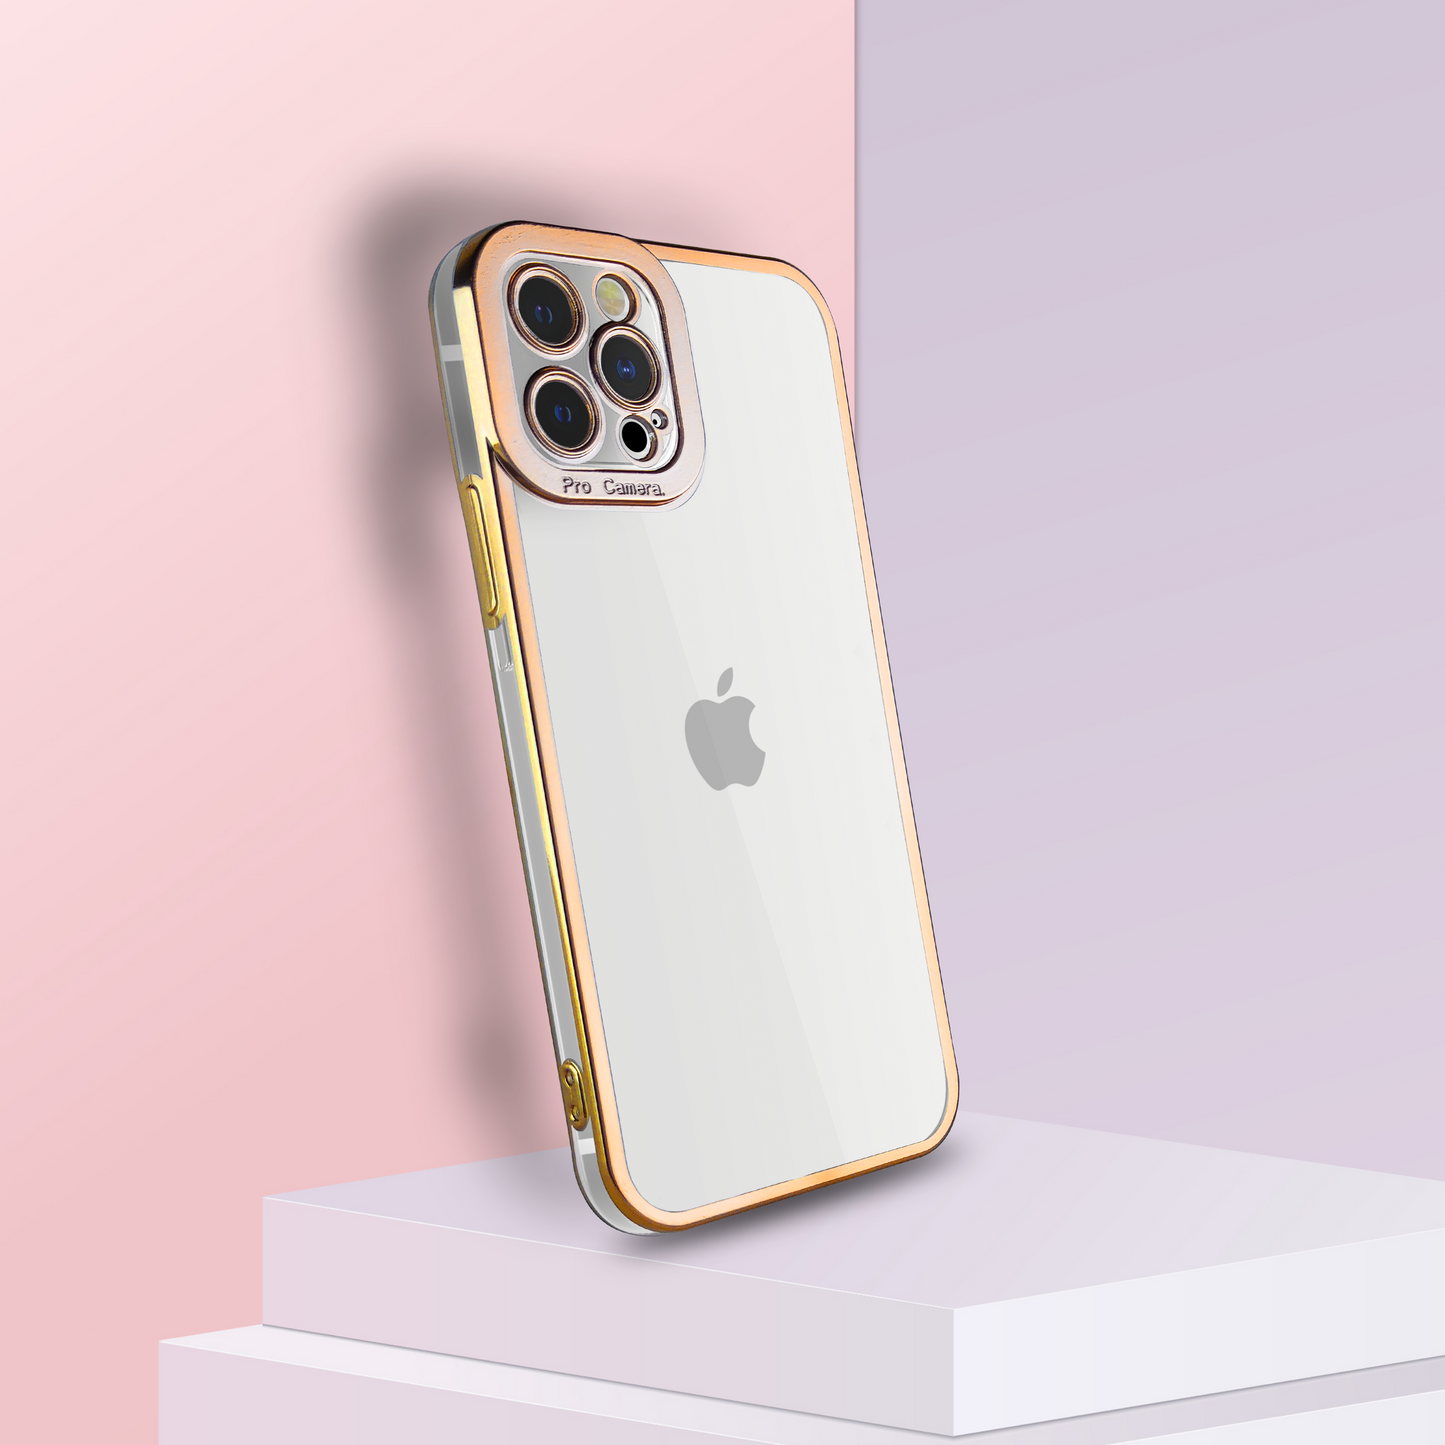 iPhone 12 Pro Max Luxury chrome plating case